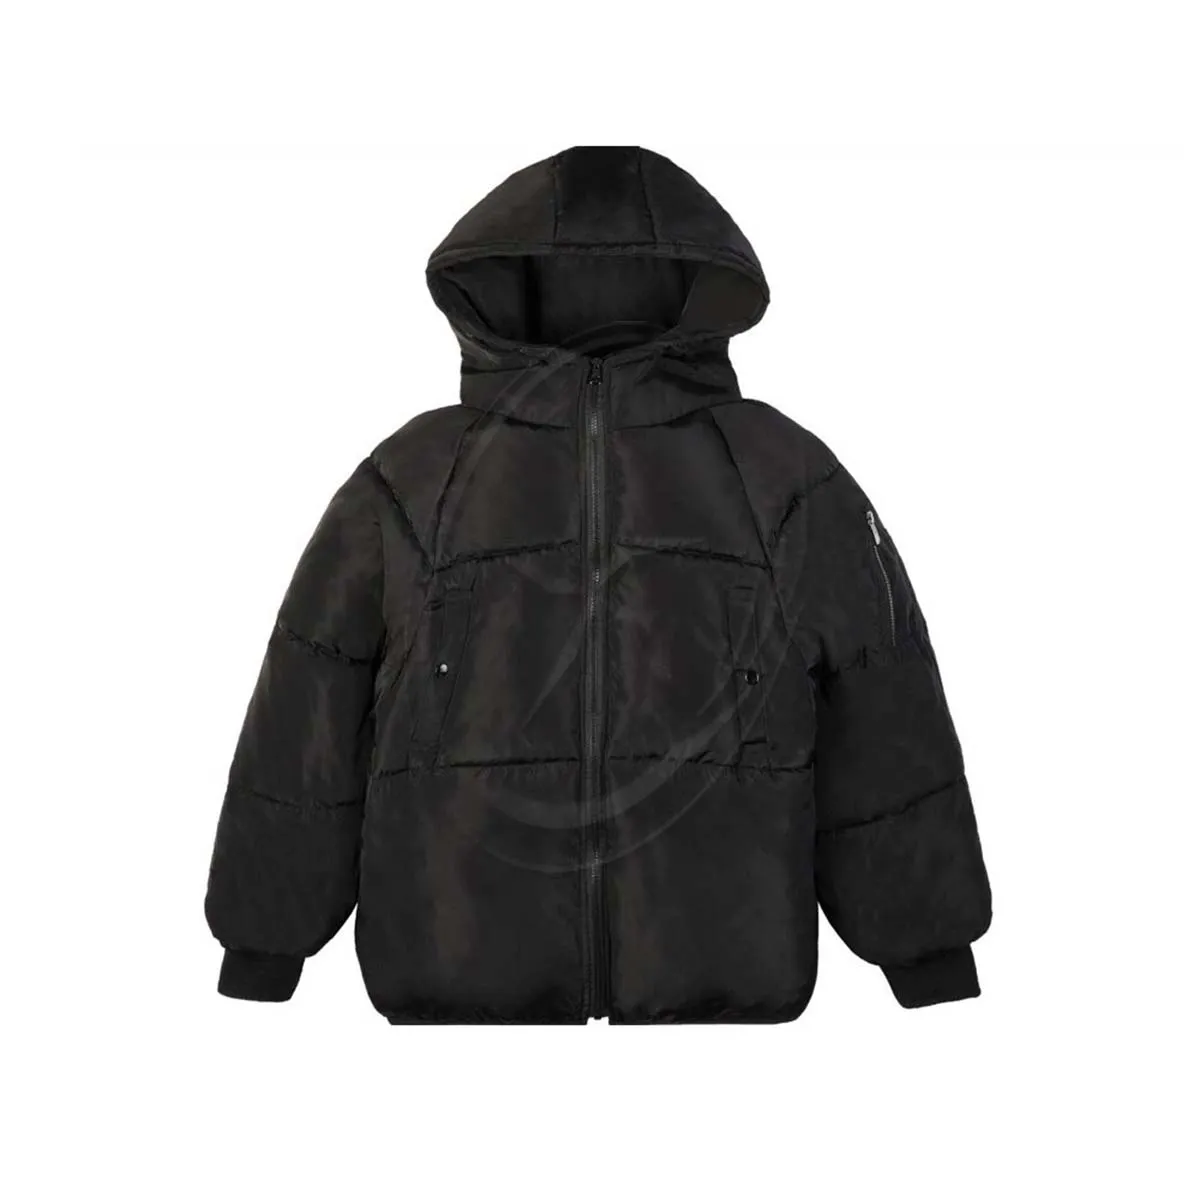 Man Casual Outwear Windbreaker Hoodies Bomber Jackets Clothing Winter Jacket Mens Fashion Cotton Thick Warm Parkas Coats